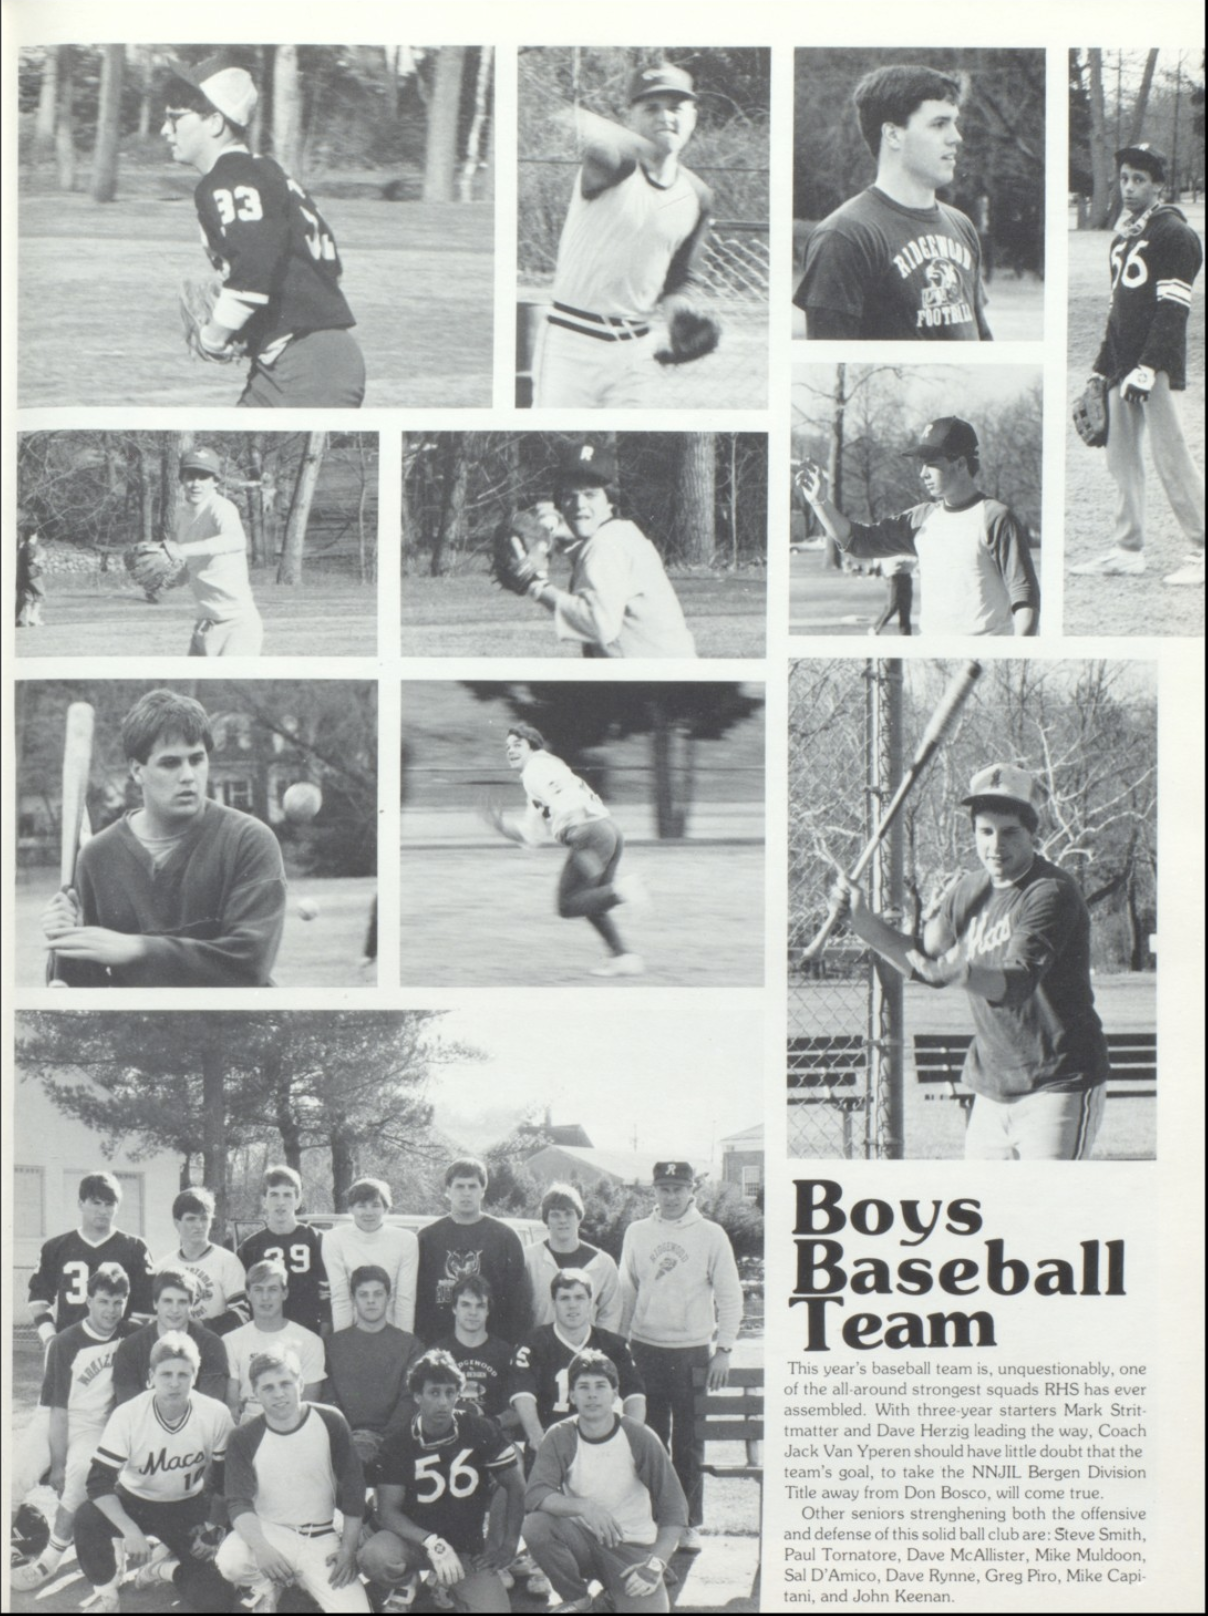 1987 Boys’ Baseball Team